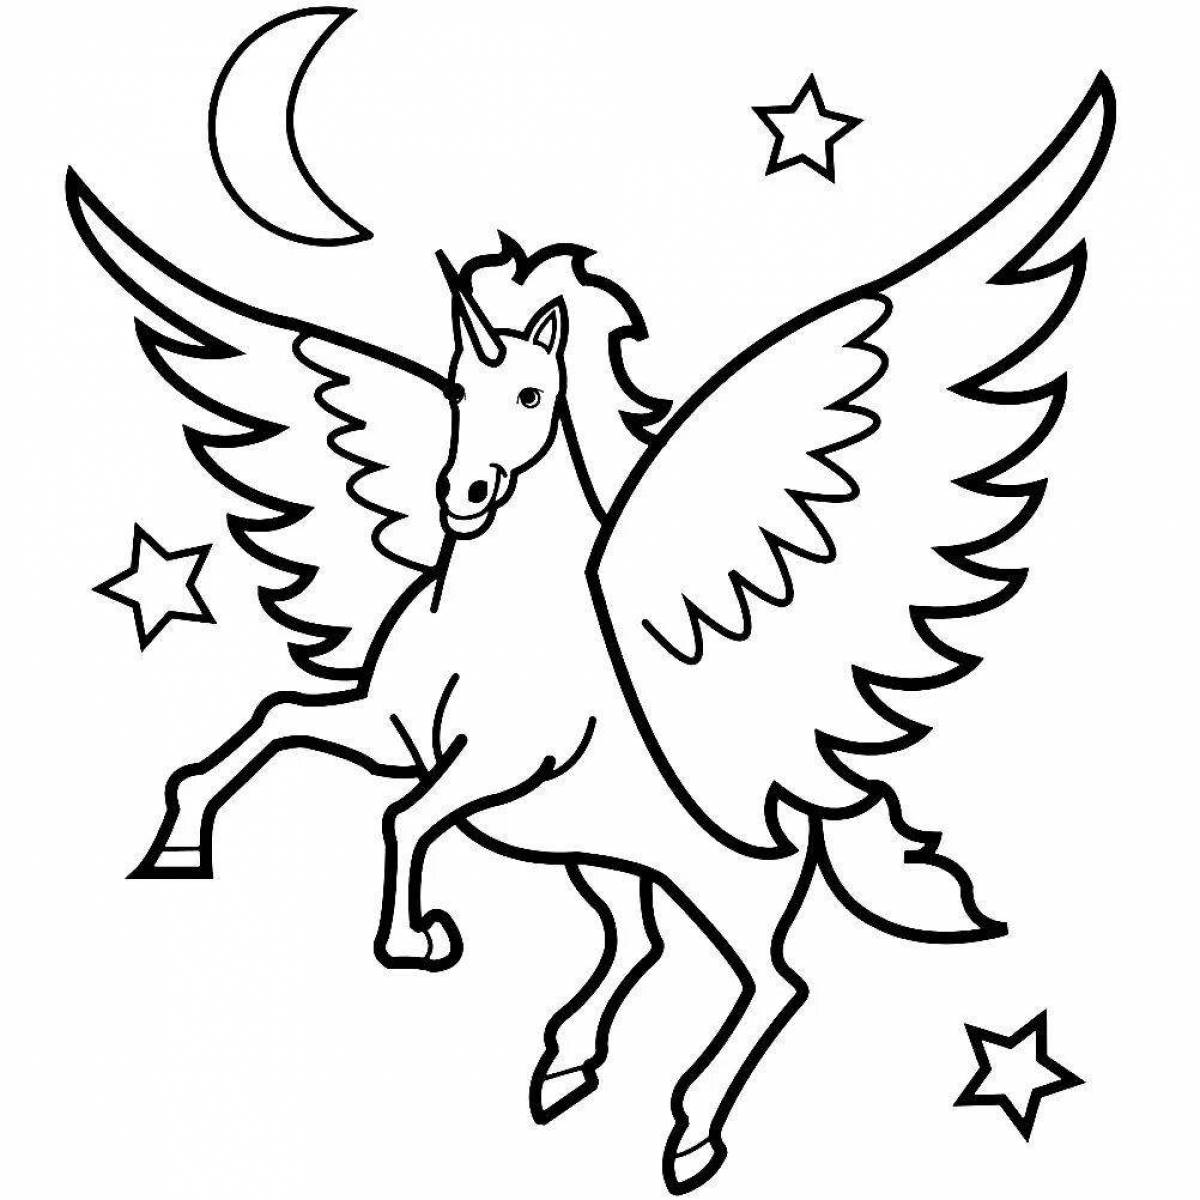 Pegasus and unicorns playful coloring page